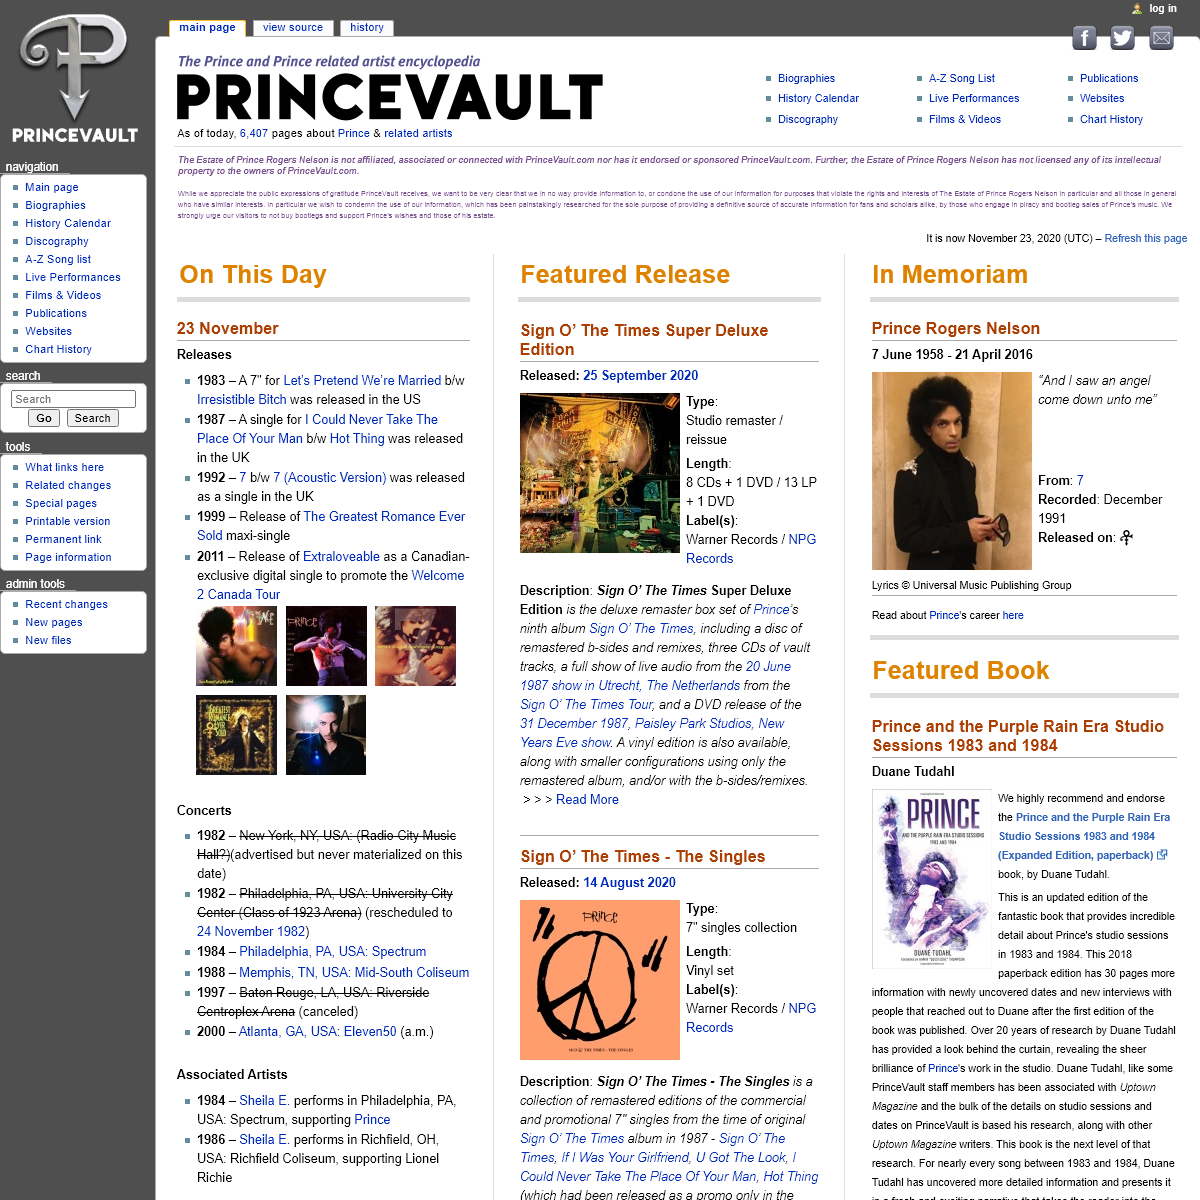 A complete backup of princevault.com